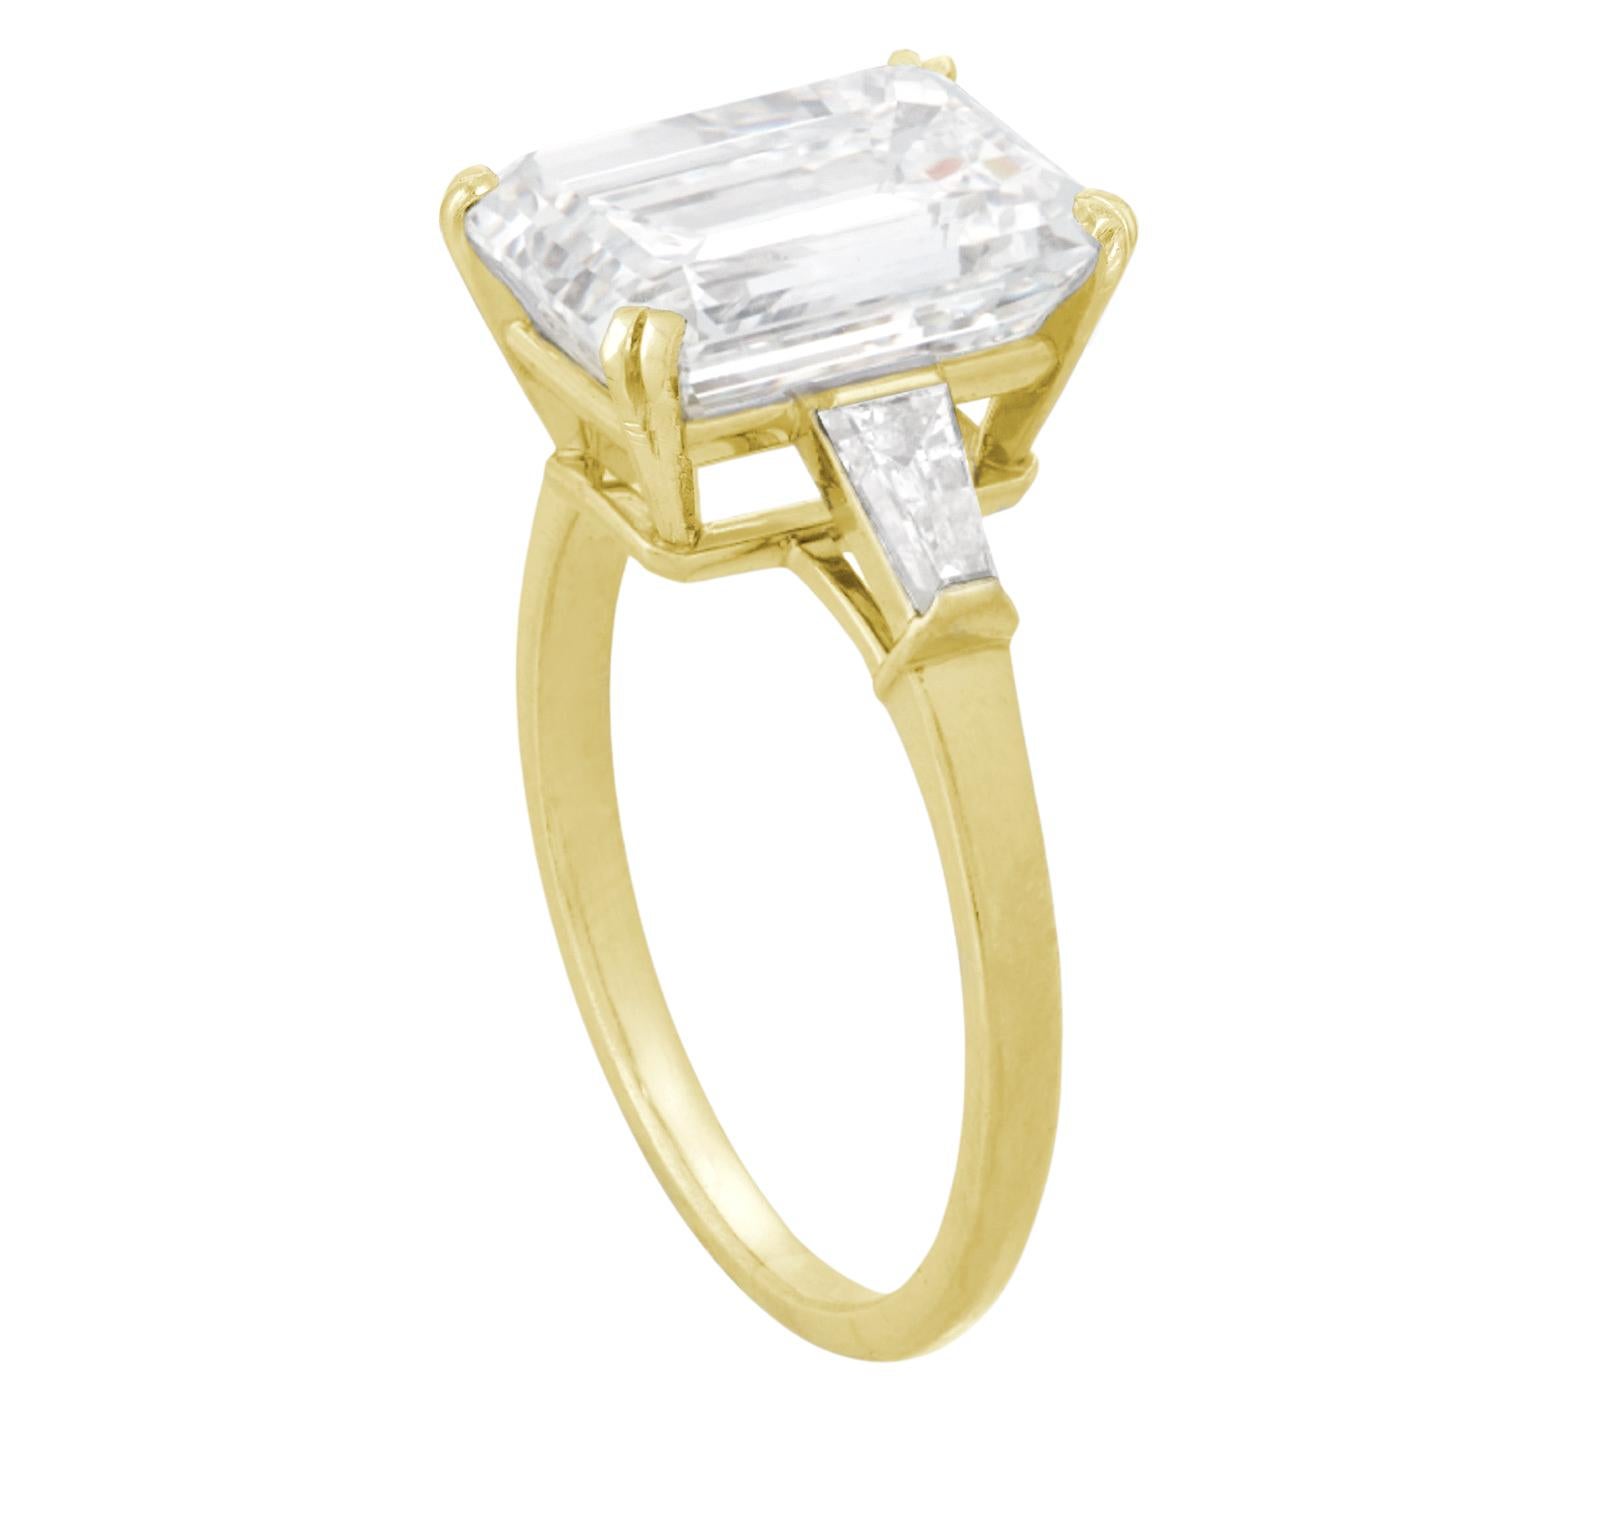 An exquisite GIA certified 3 carat emerald cut diamond ring
18 carat yellow gold

